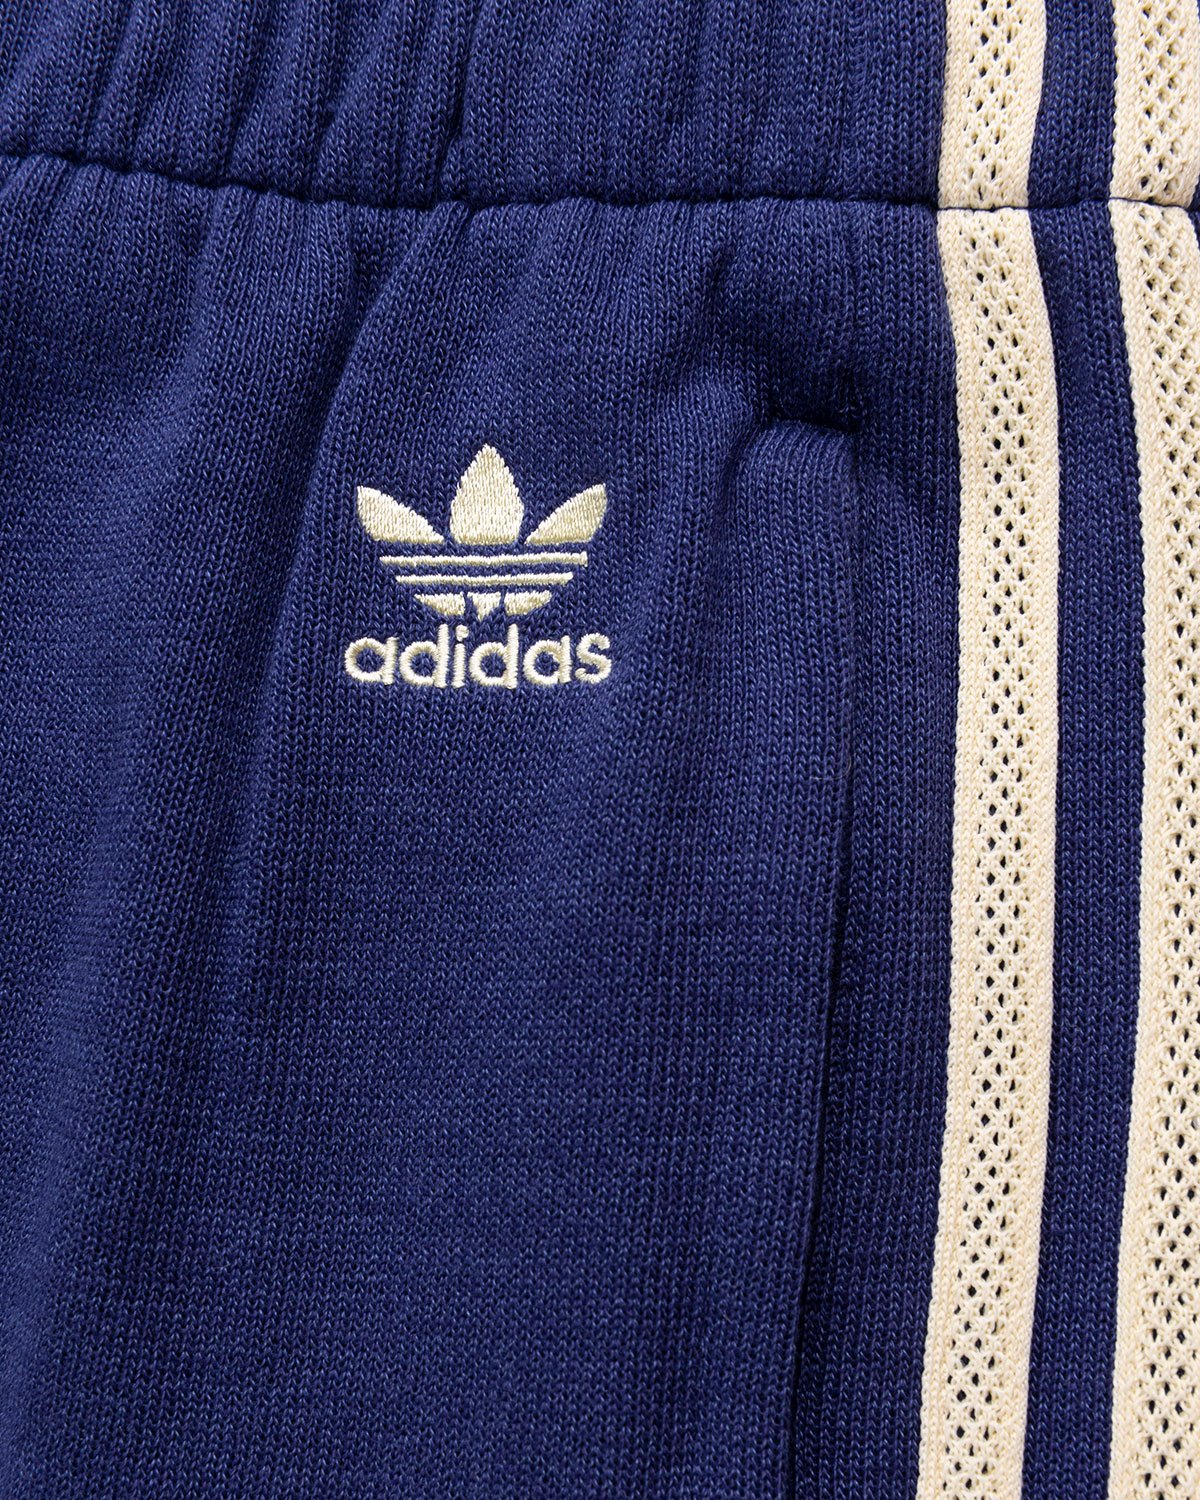 Adidas x Wales Bonner - 80s Track Pants Night Sky - Clothing - Blue - Image 5